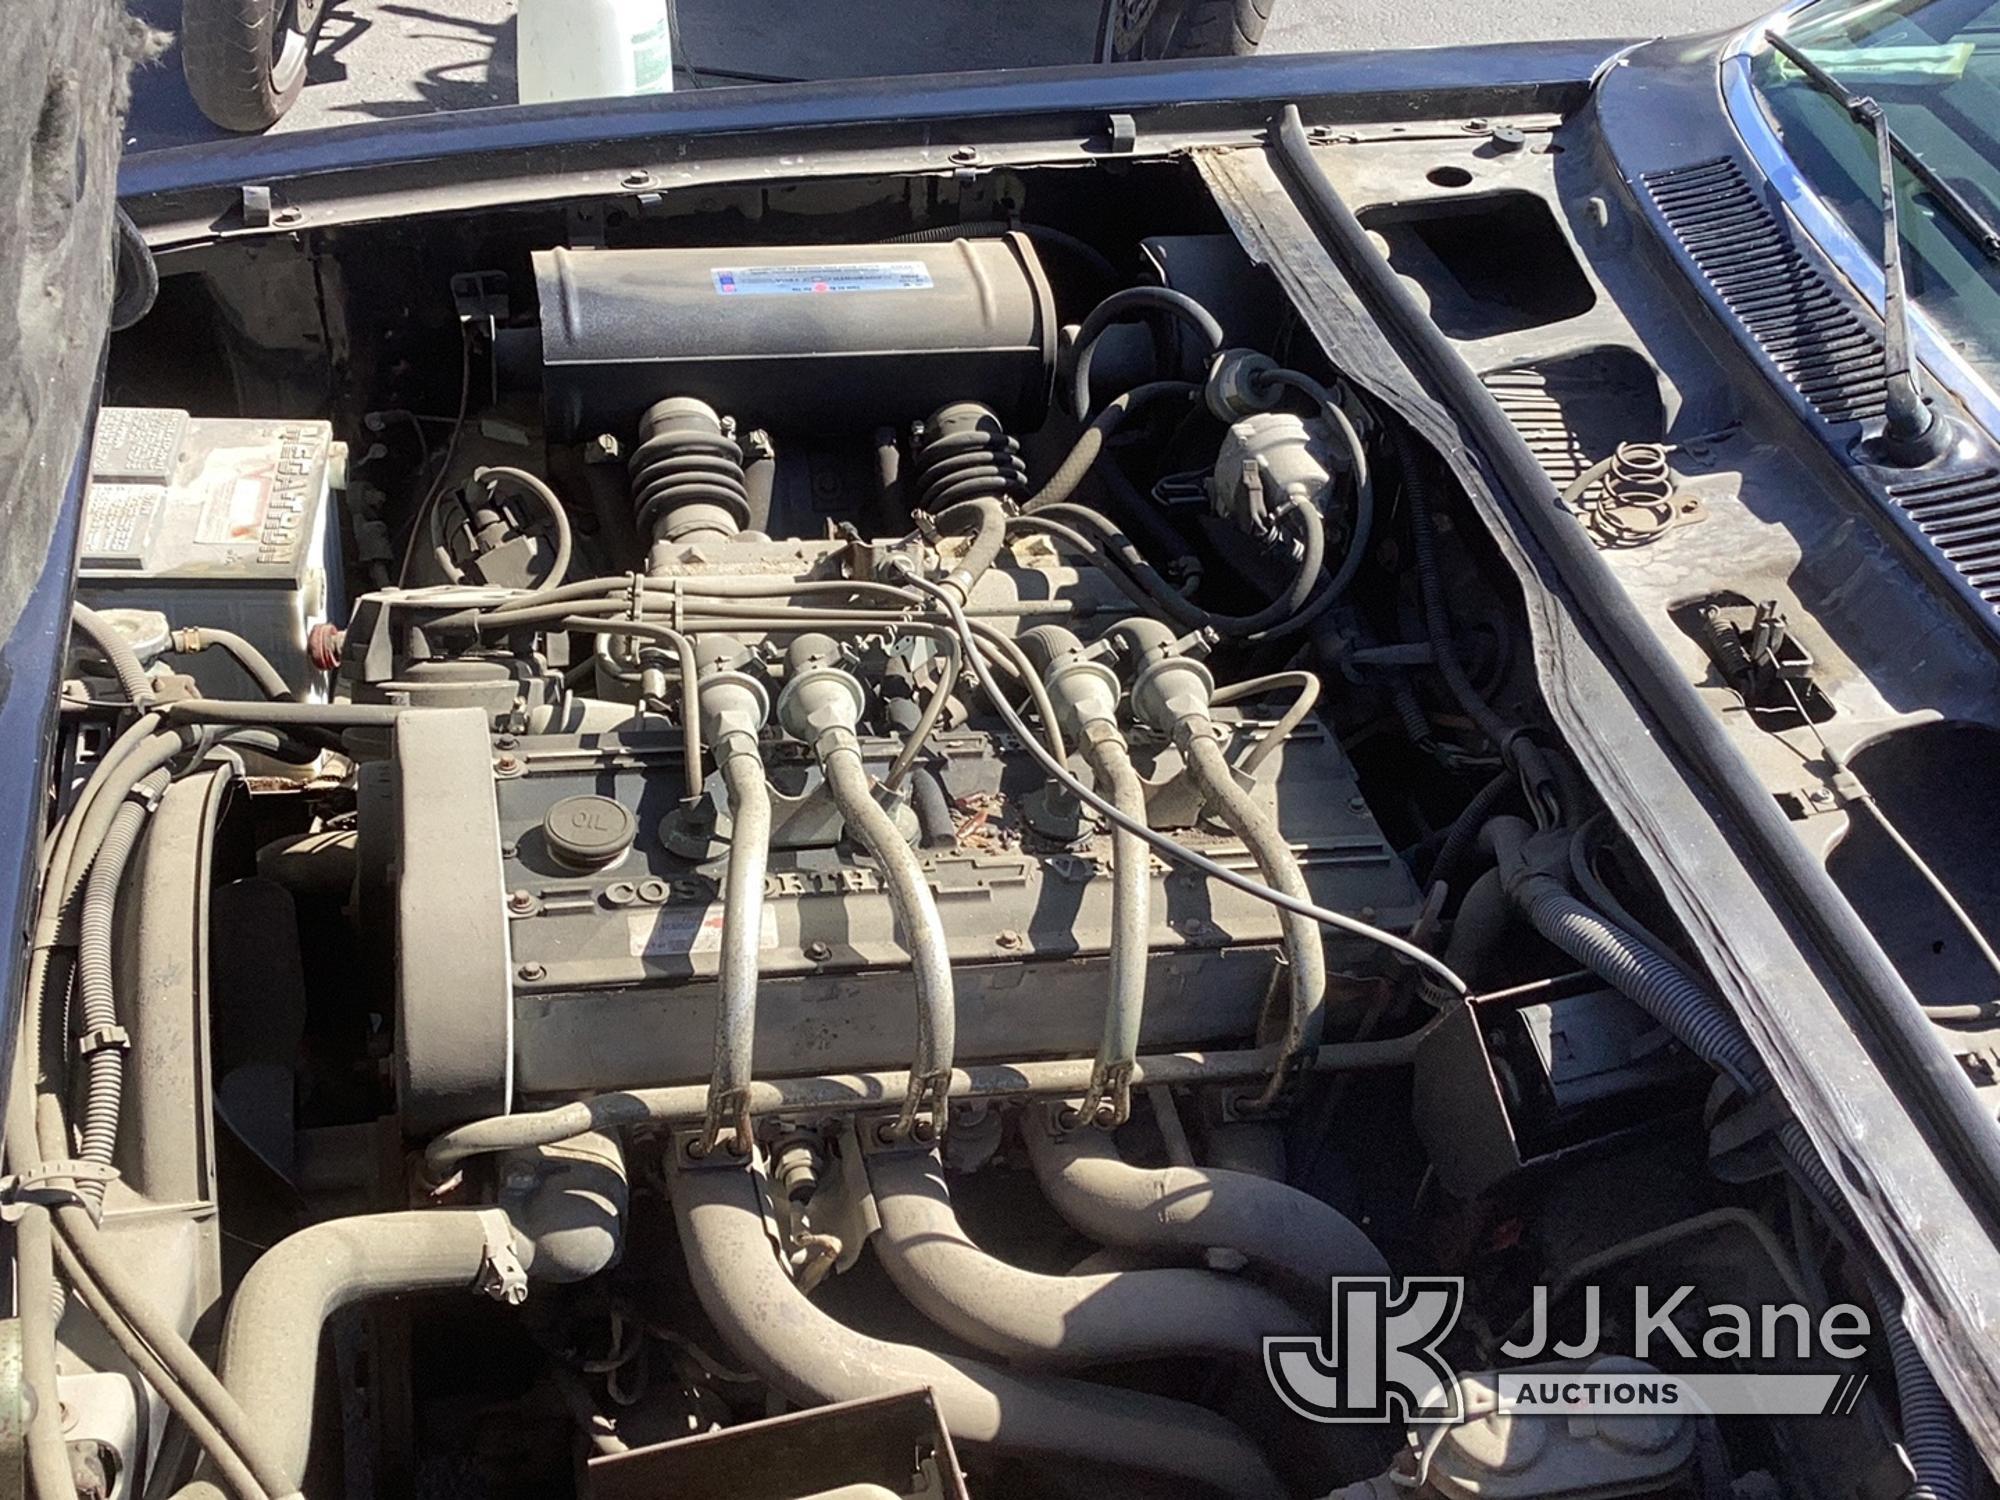 (Jurupa Valley, CA) 1976 Chevrolet Vega 2-Door Coupe Not Running, Condition Unknown,